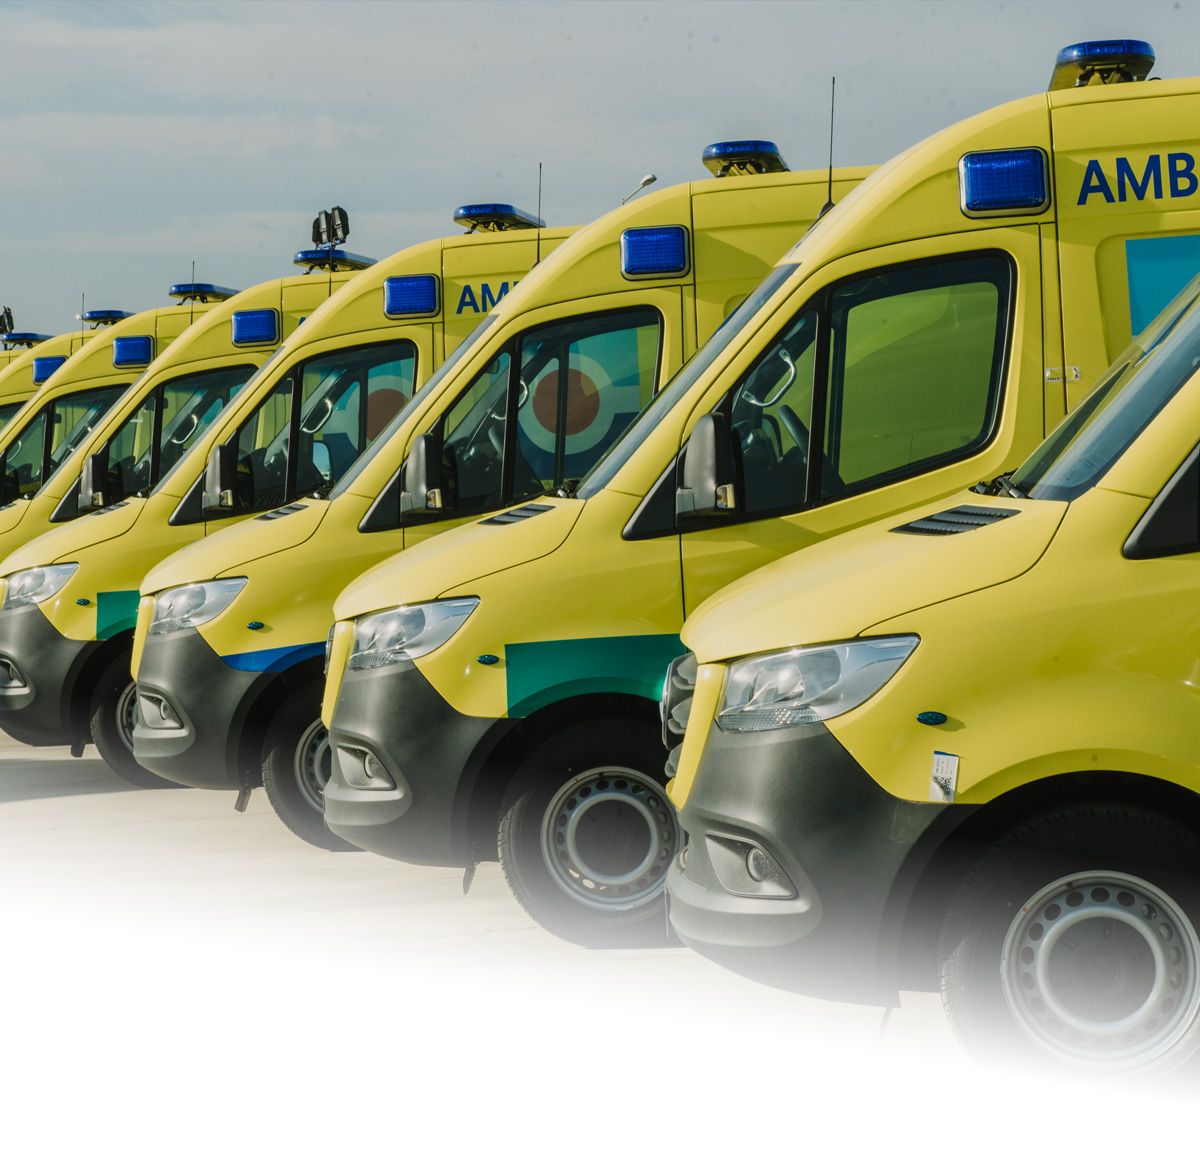 http://ambulancias-malaga.es/wp-content/uploads/2020/04/360-ambulancias.jpg